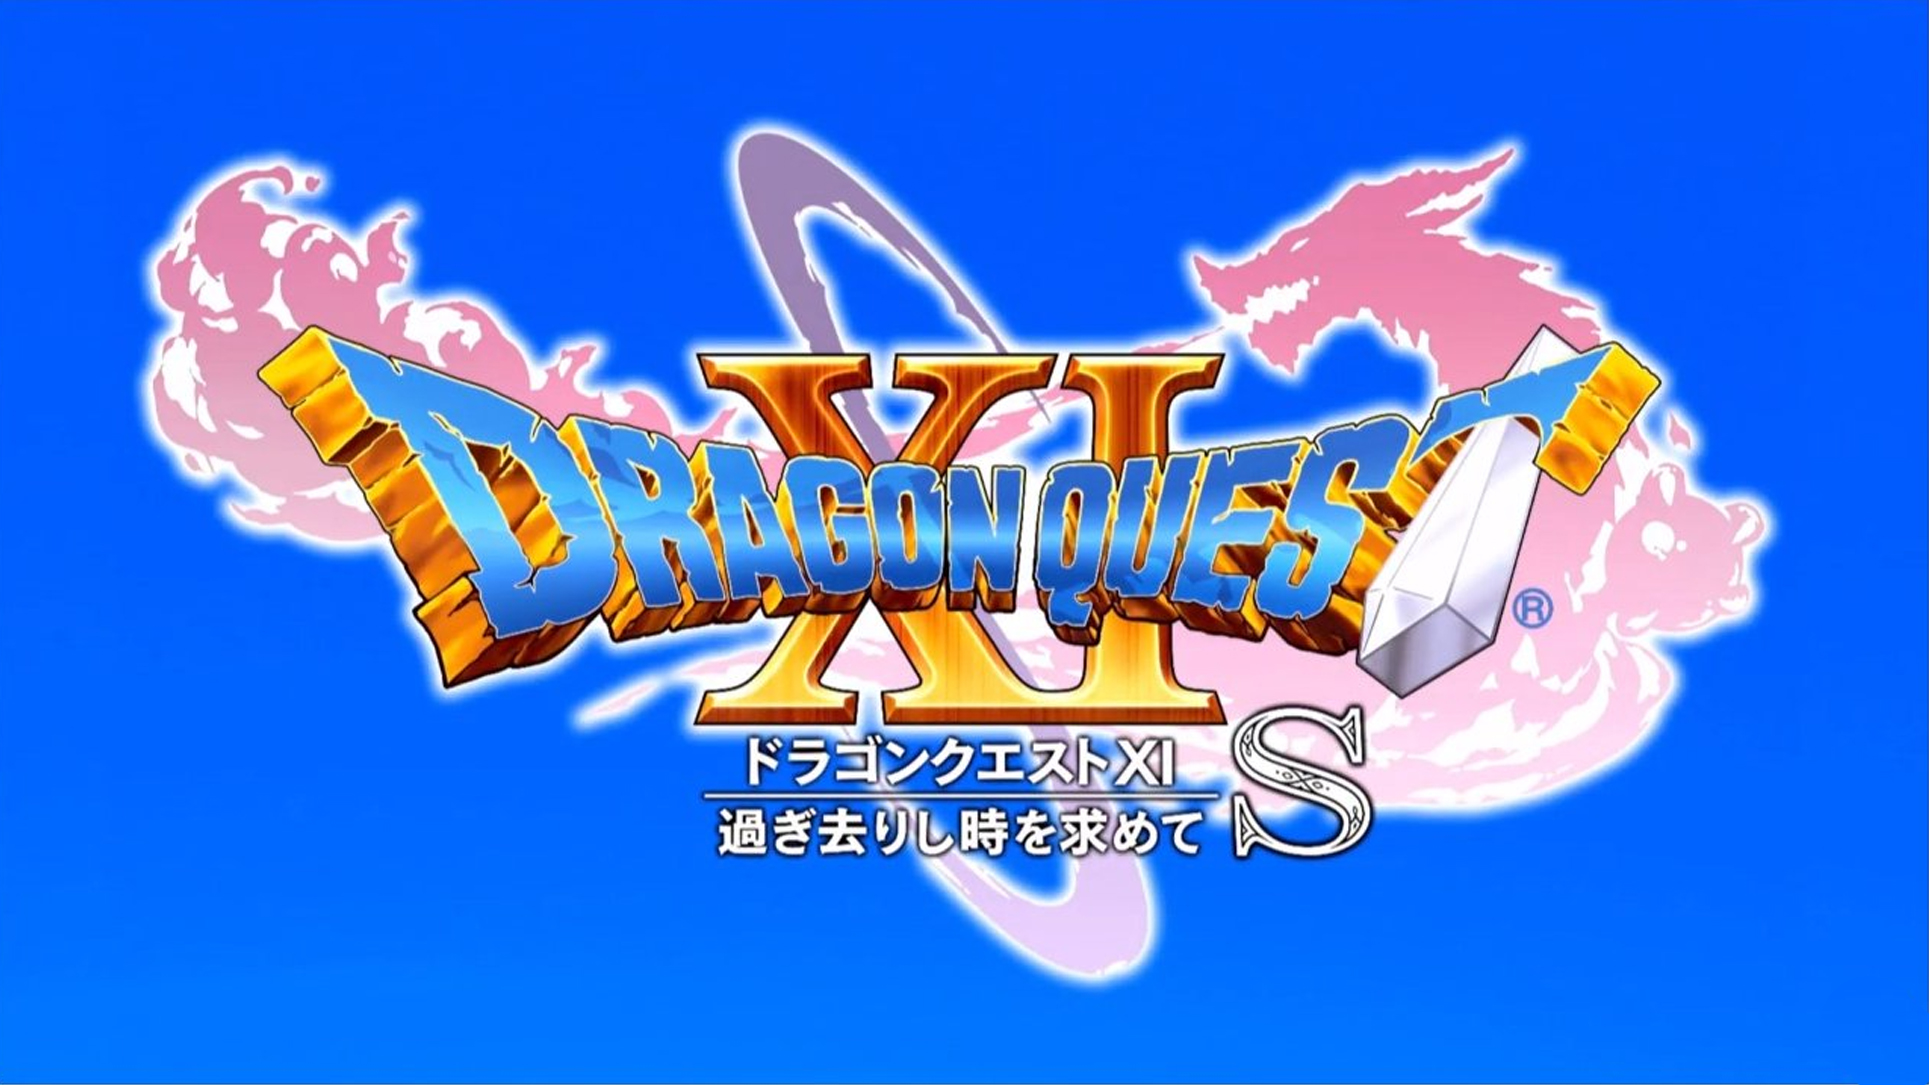 Dragon Quest XI S Announced